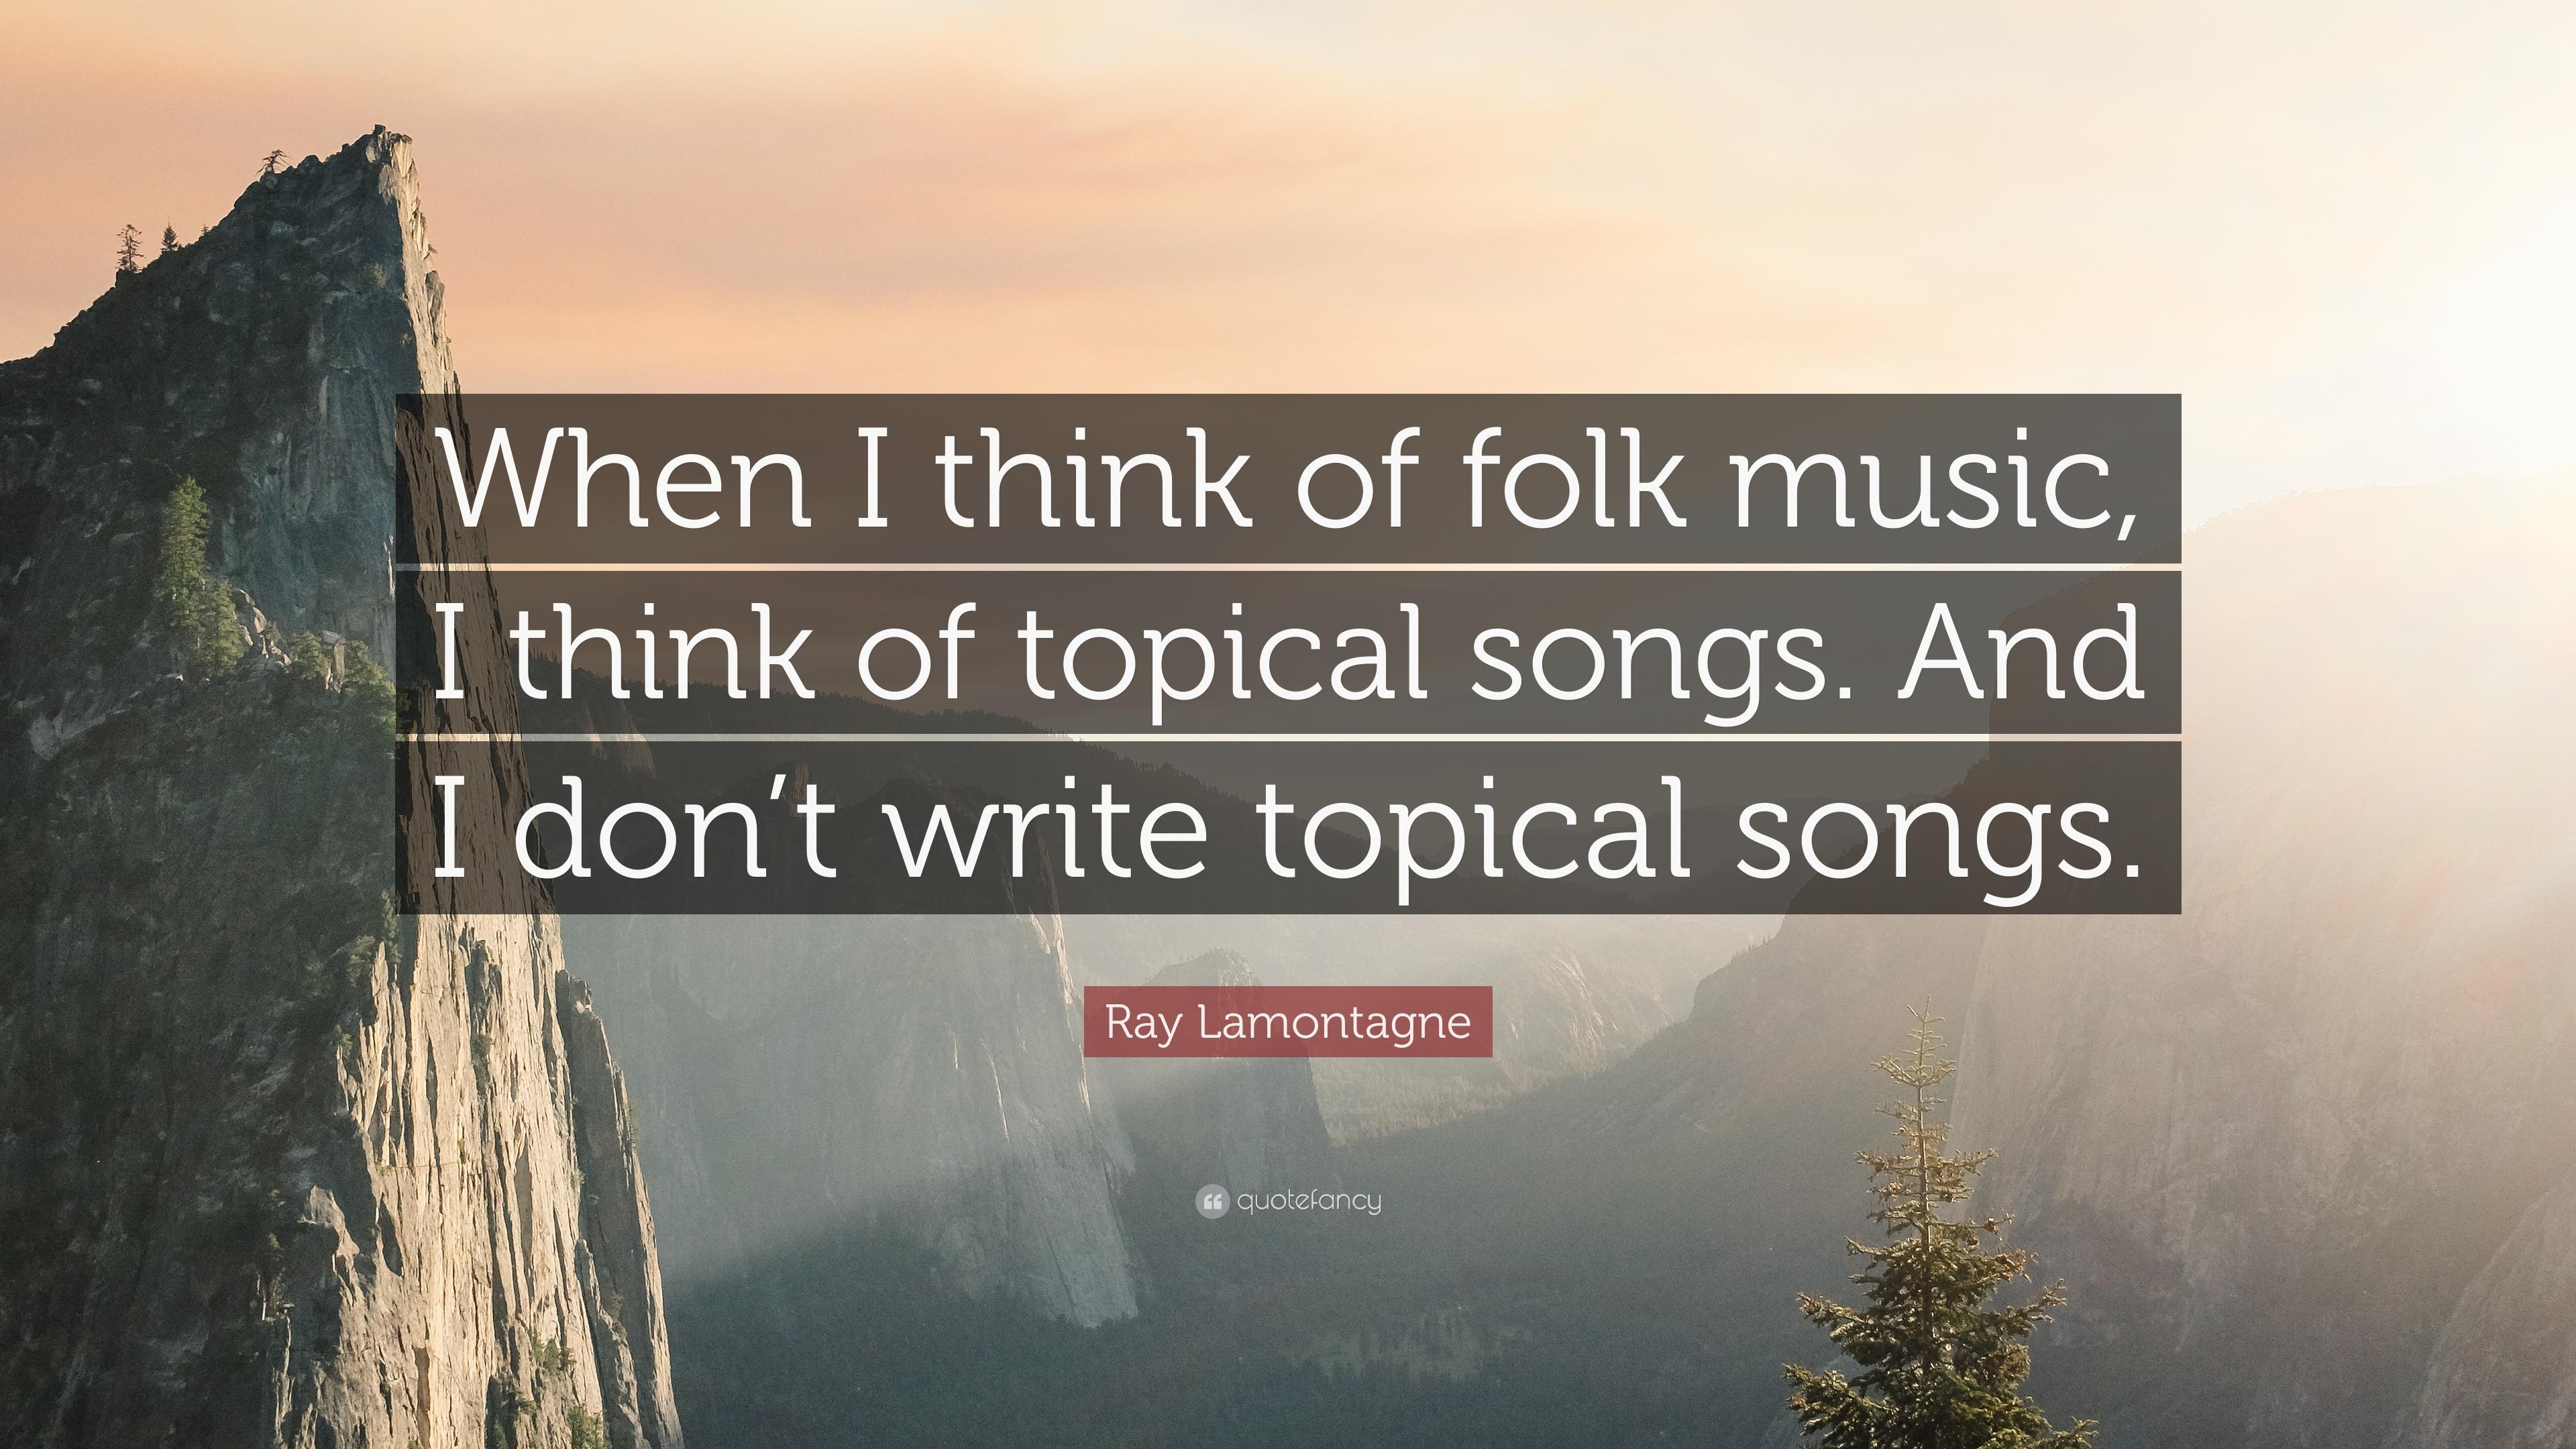 Ray Lamontagne Quote: “When I think of folk music, I think